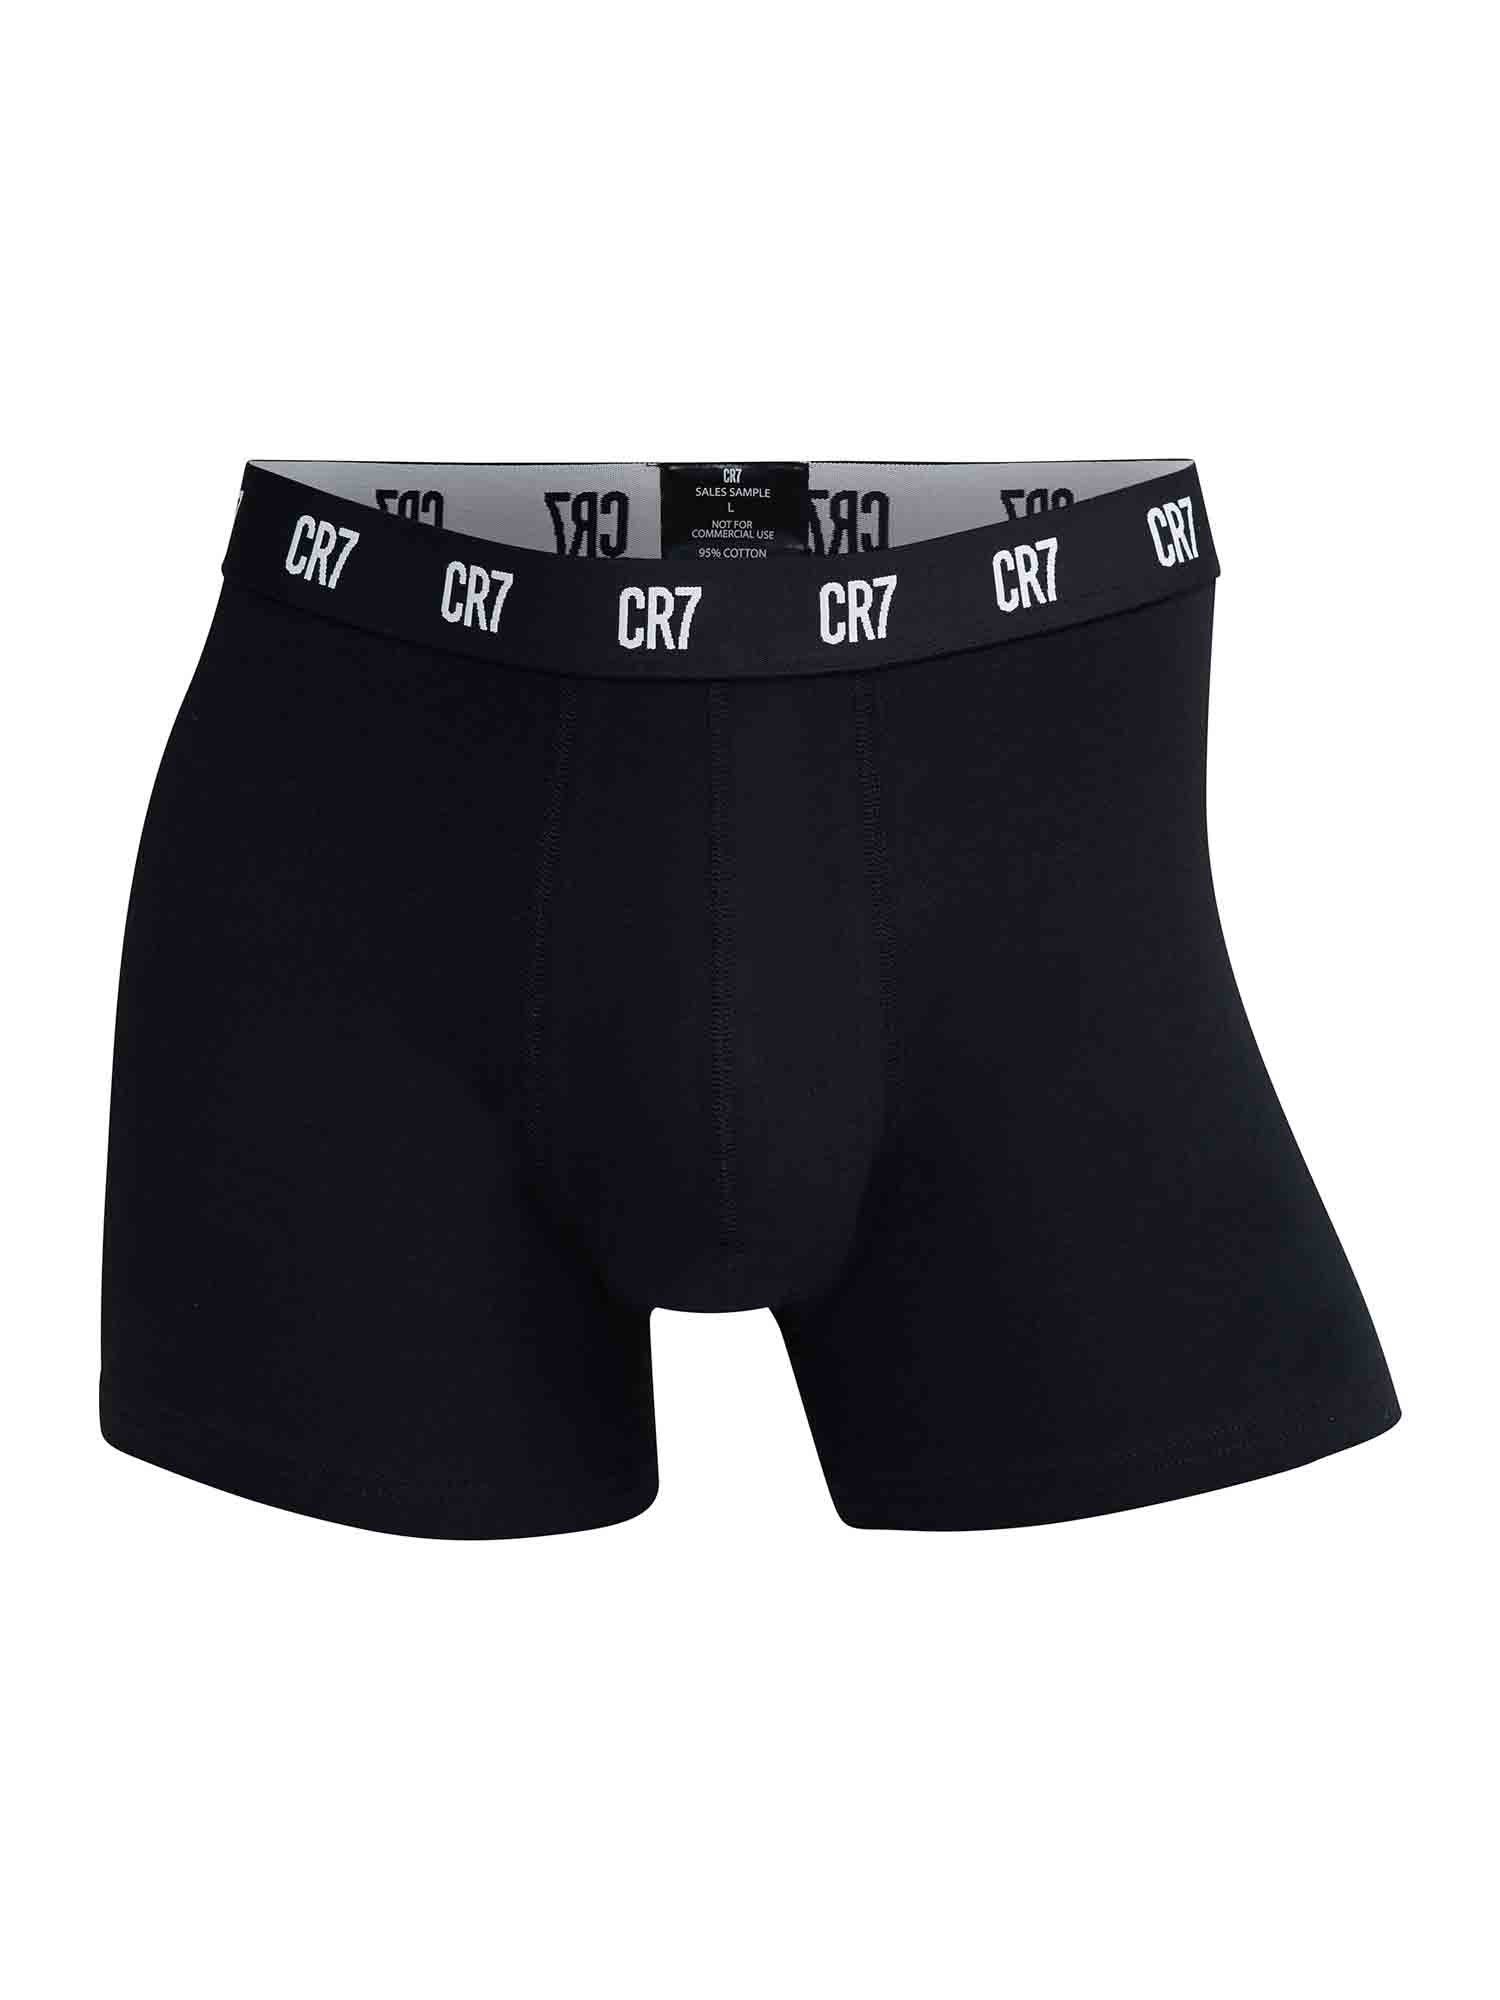 Pants Boxershorts (5-St) Retro Männer Multipack Multi CR7 Herren 17 Trunks Pants Retro